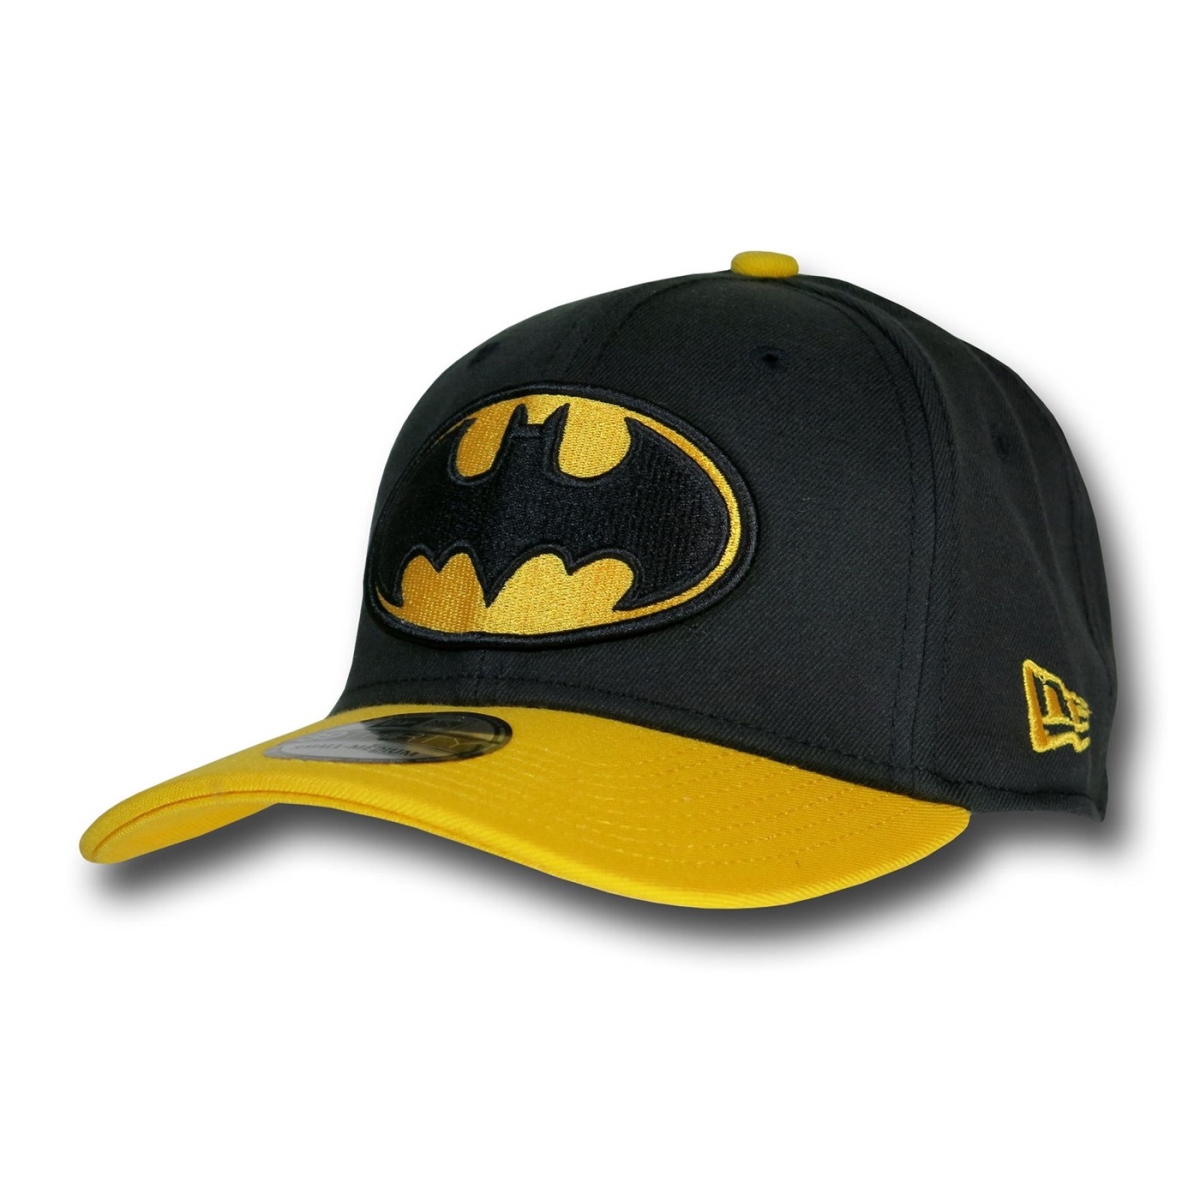 Picture of Batman capbatbkyw3930-m & l 39 Thirty Hat&#44; Black & Yellow - Medium & Large